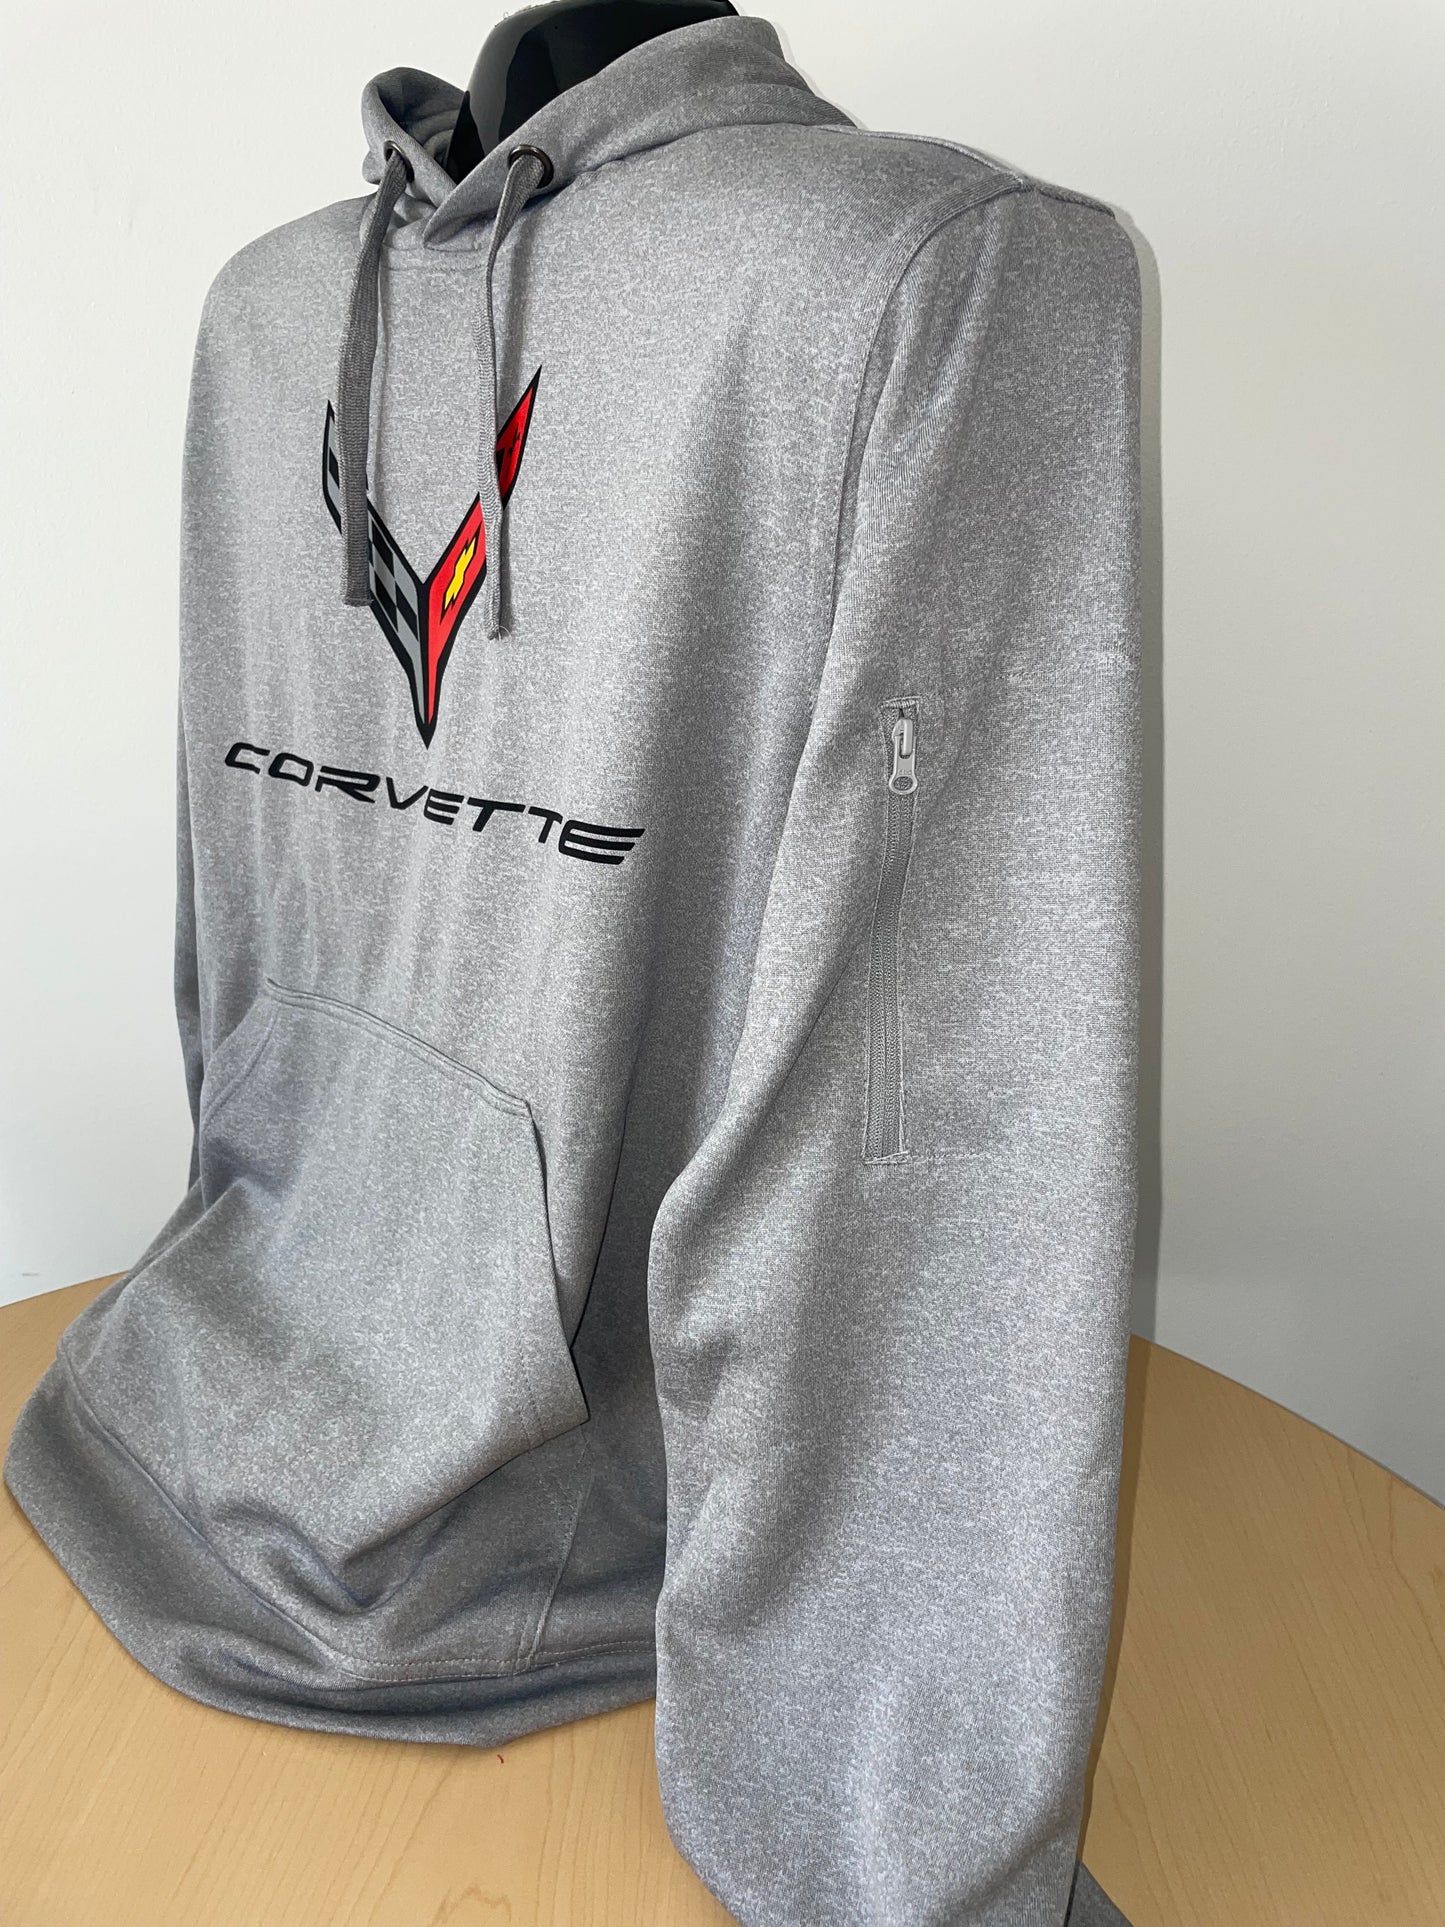 C8 Corvette Hooded Sweatshirt Gray